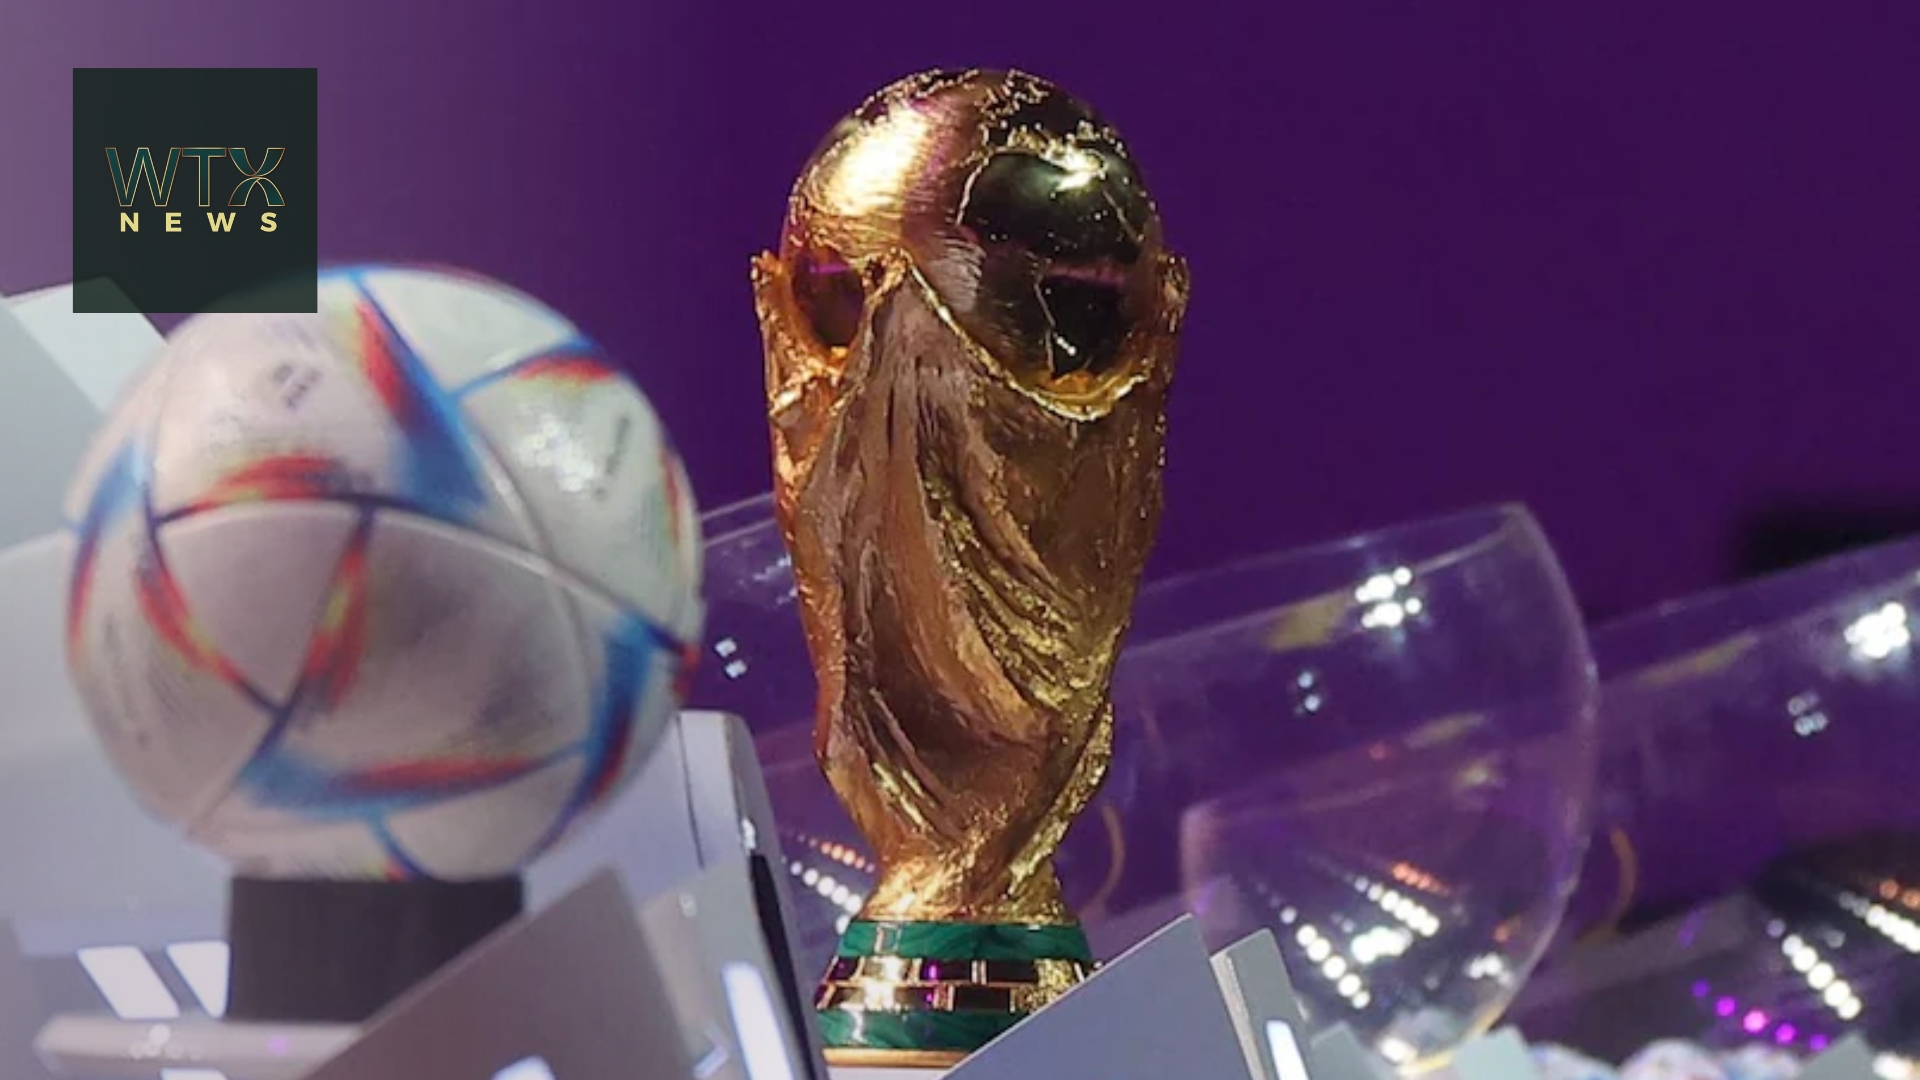 -Qatar World Cup 2022 / 2022 World Cup / Fifa world cup 